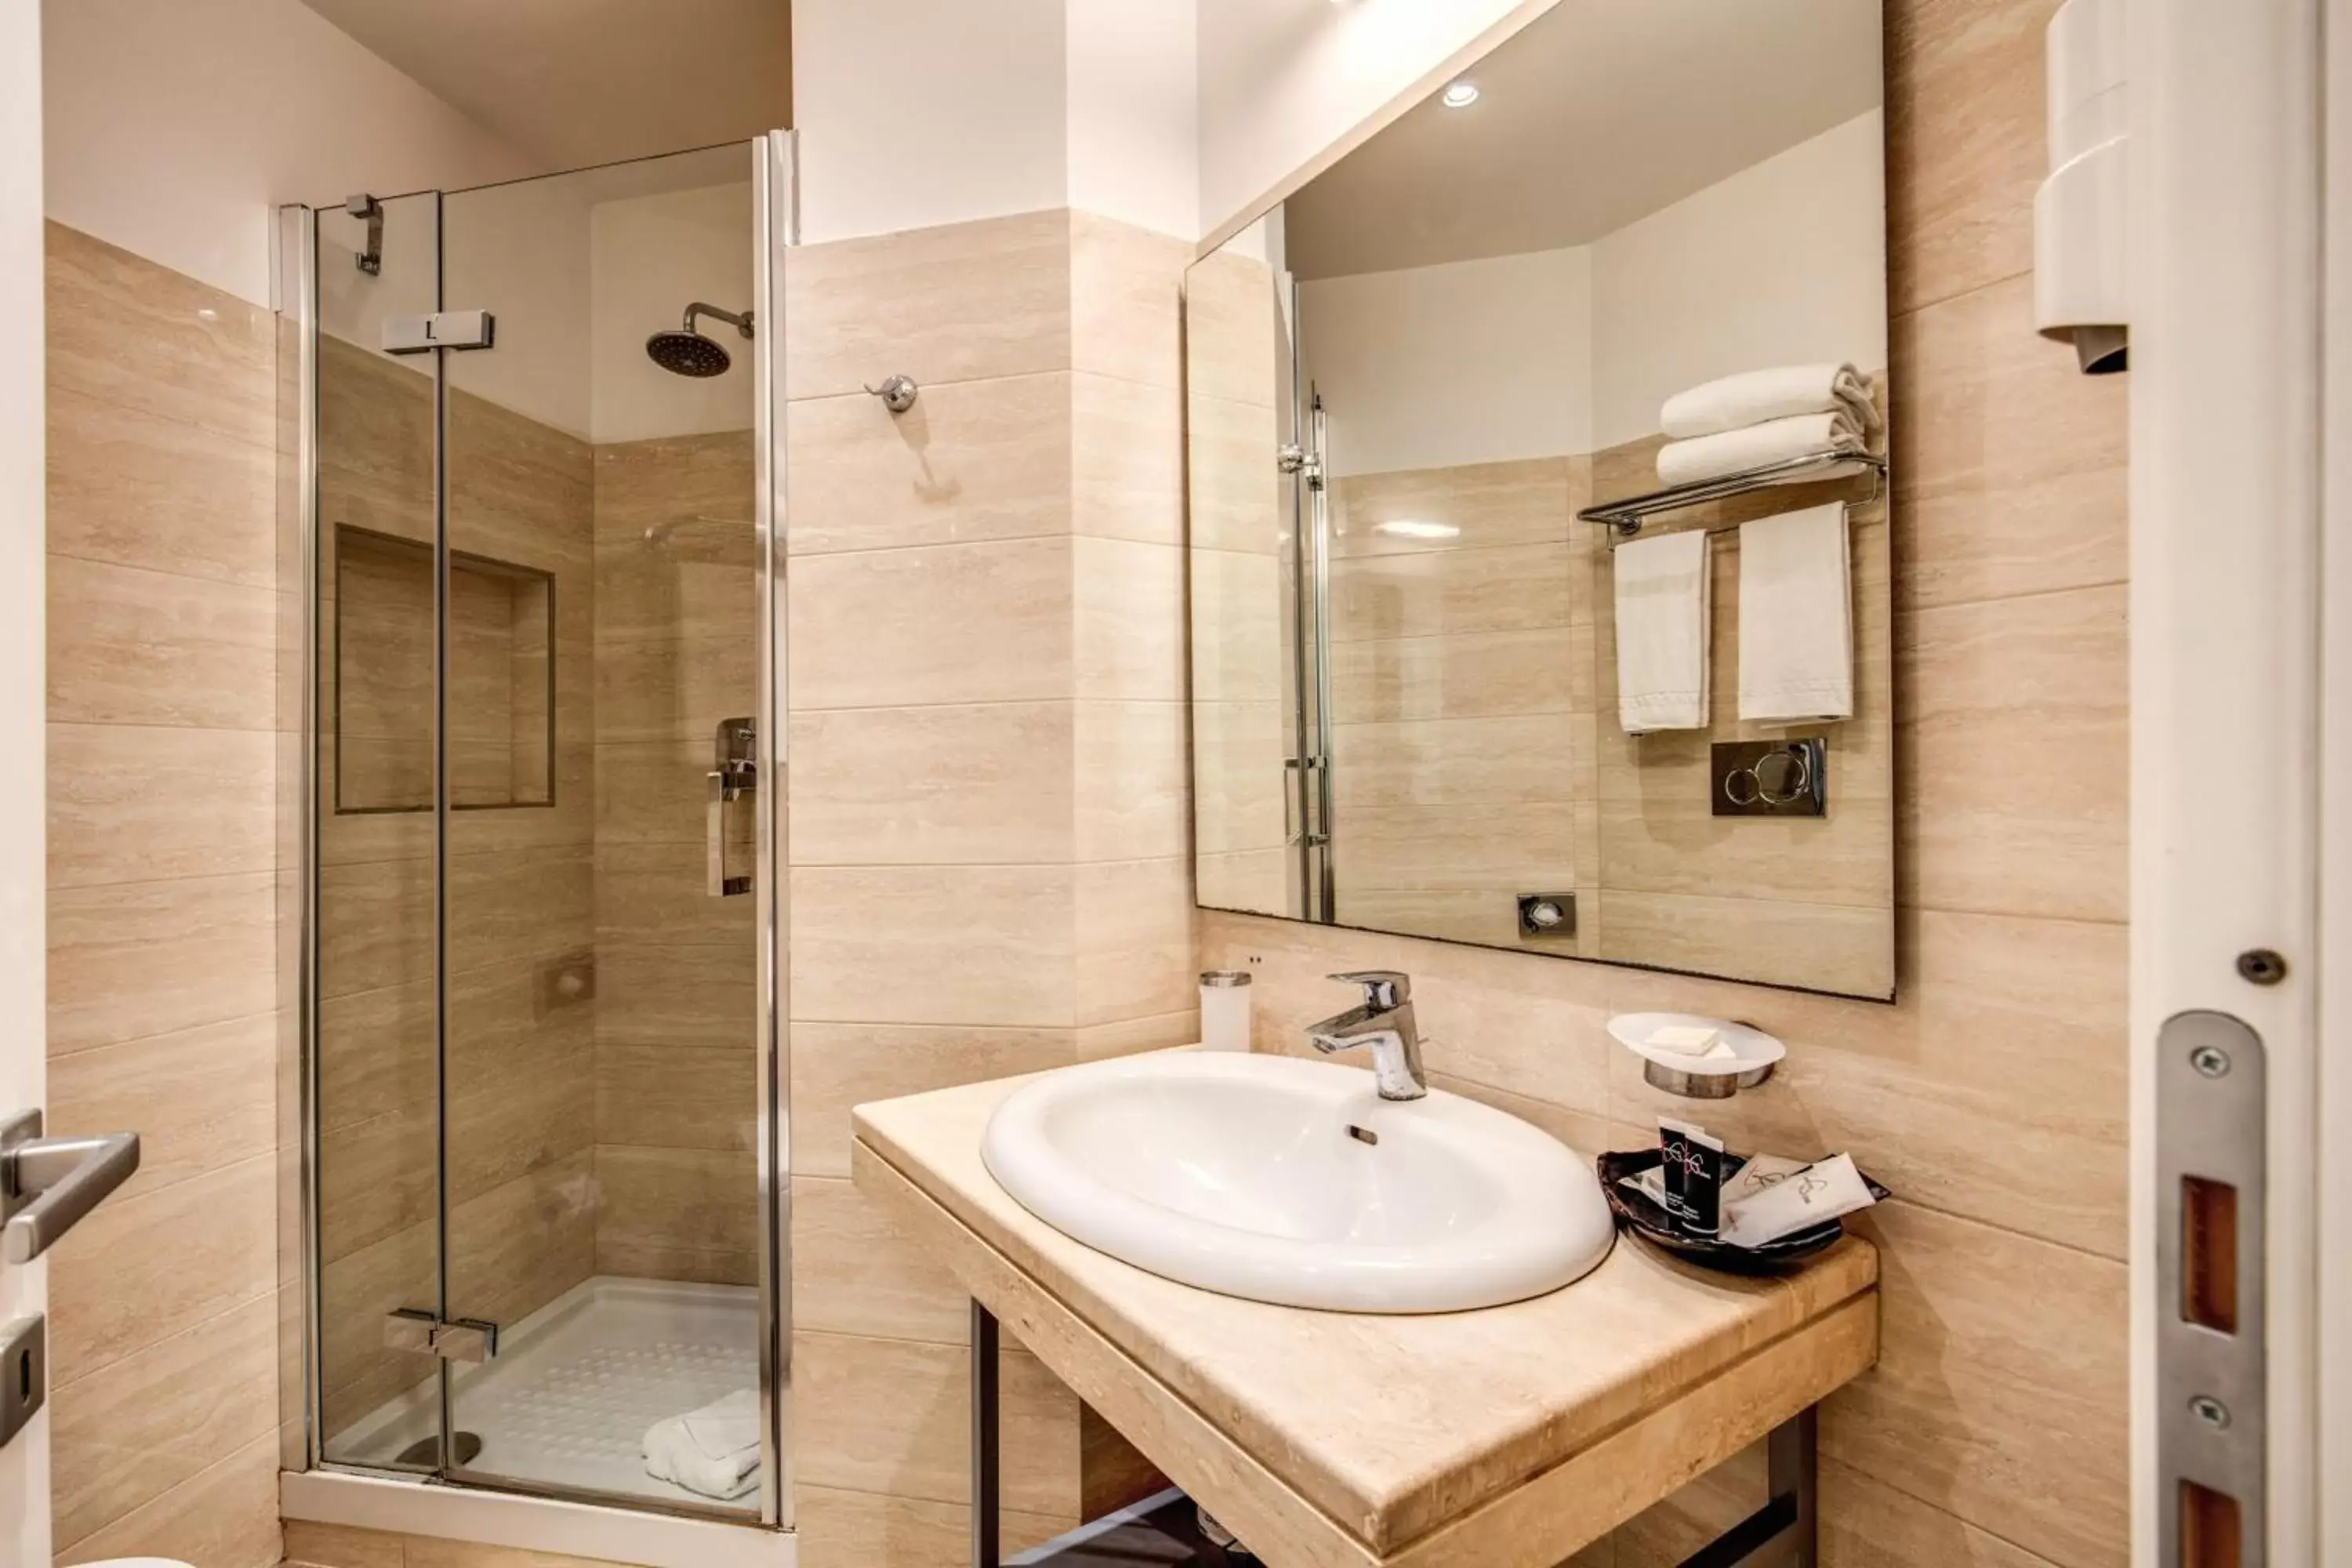 Bathroom in Rome Art Hotel - Gruppo Trevi Hotels